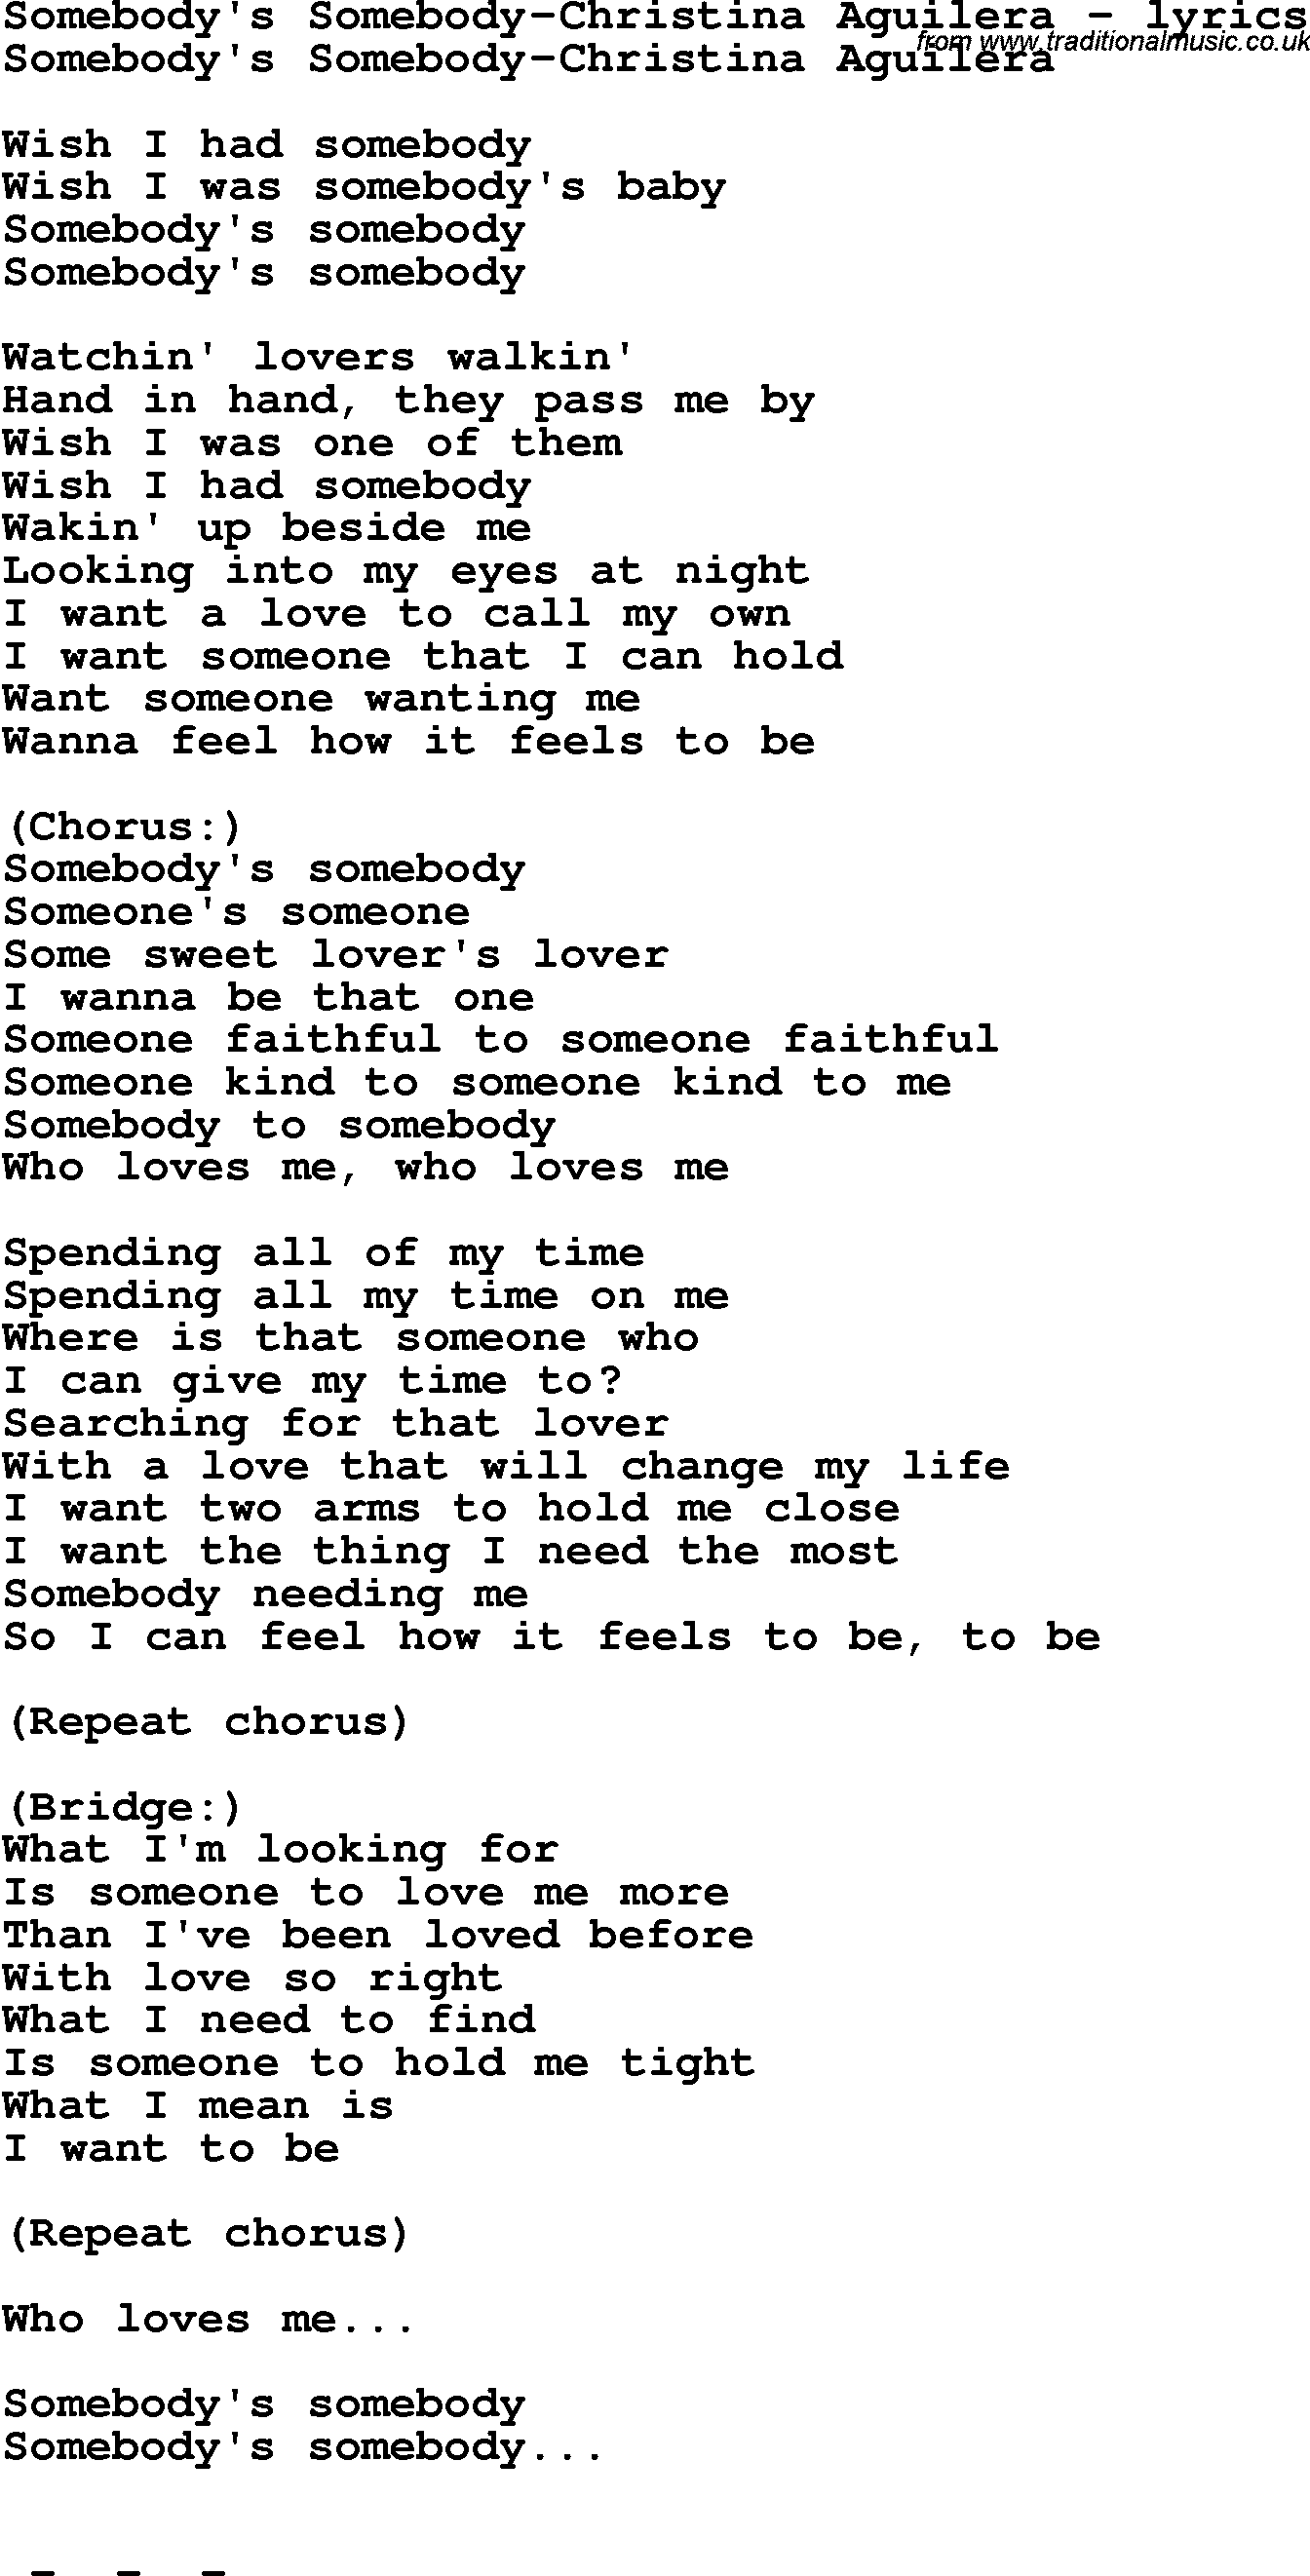 Love Song Lyrics for: Somebody's Somebody-Christina Aguilera